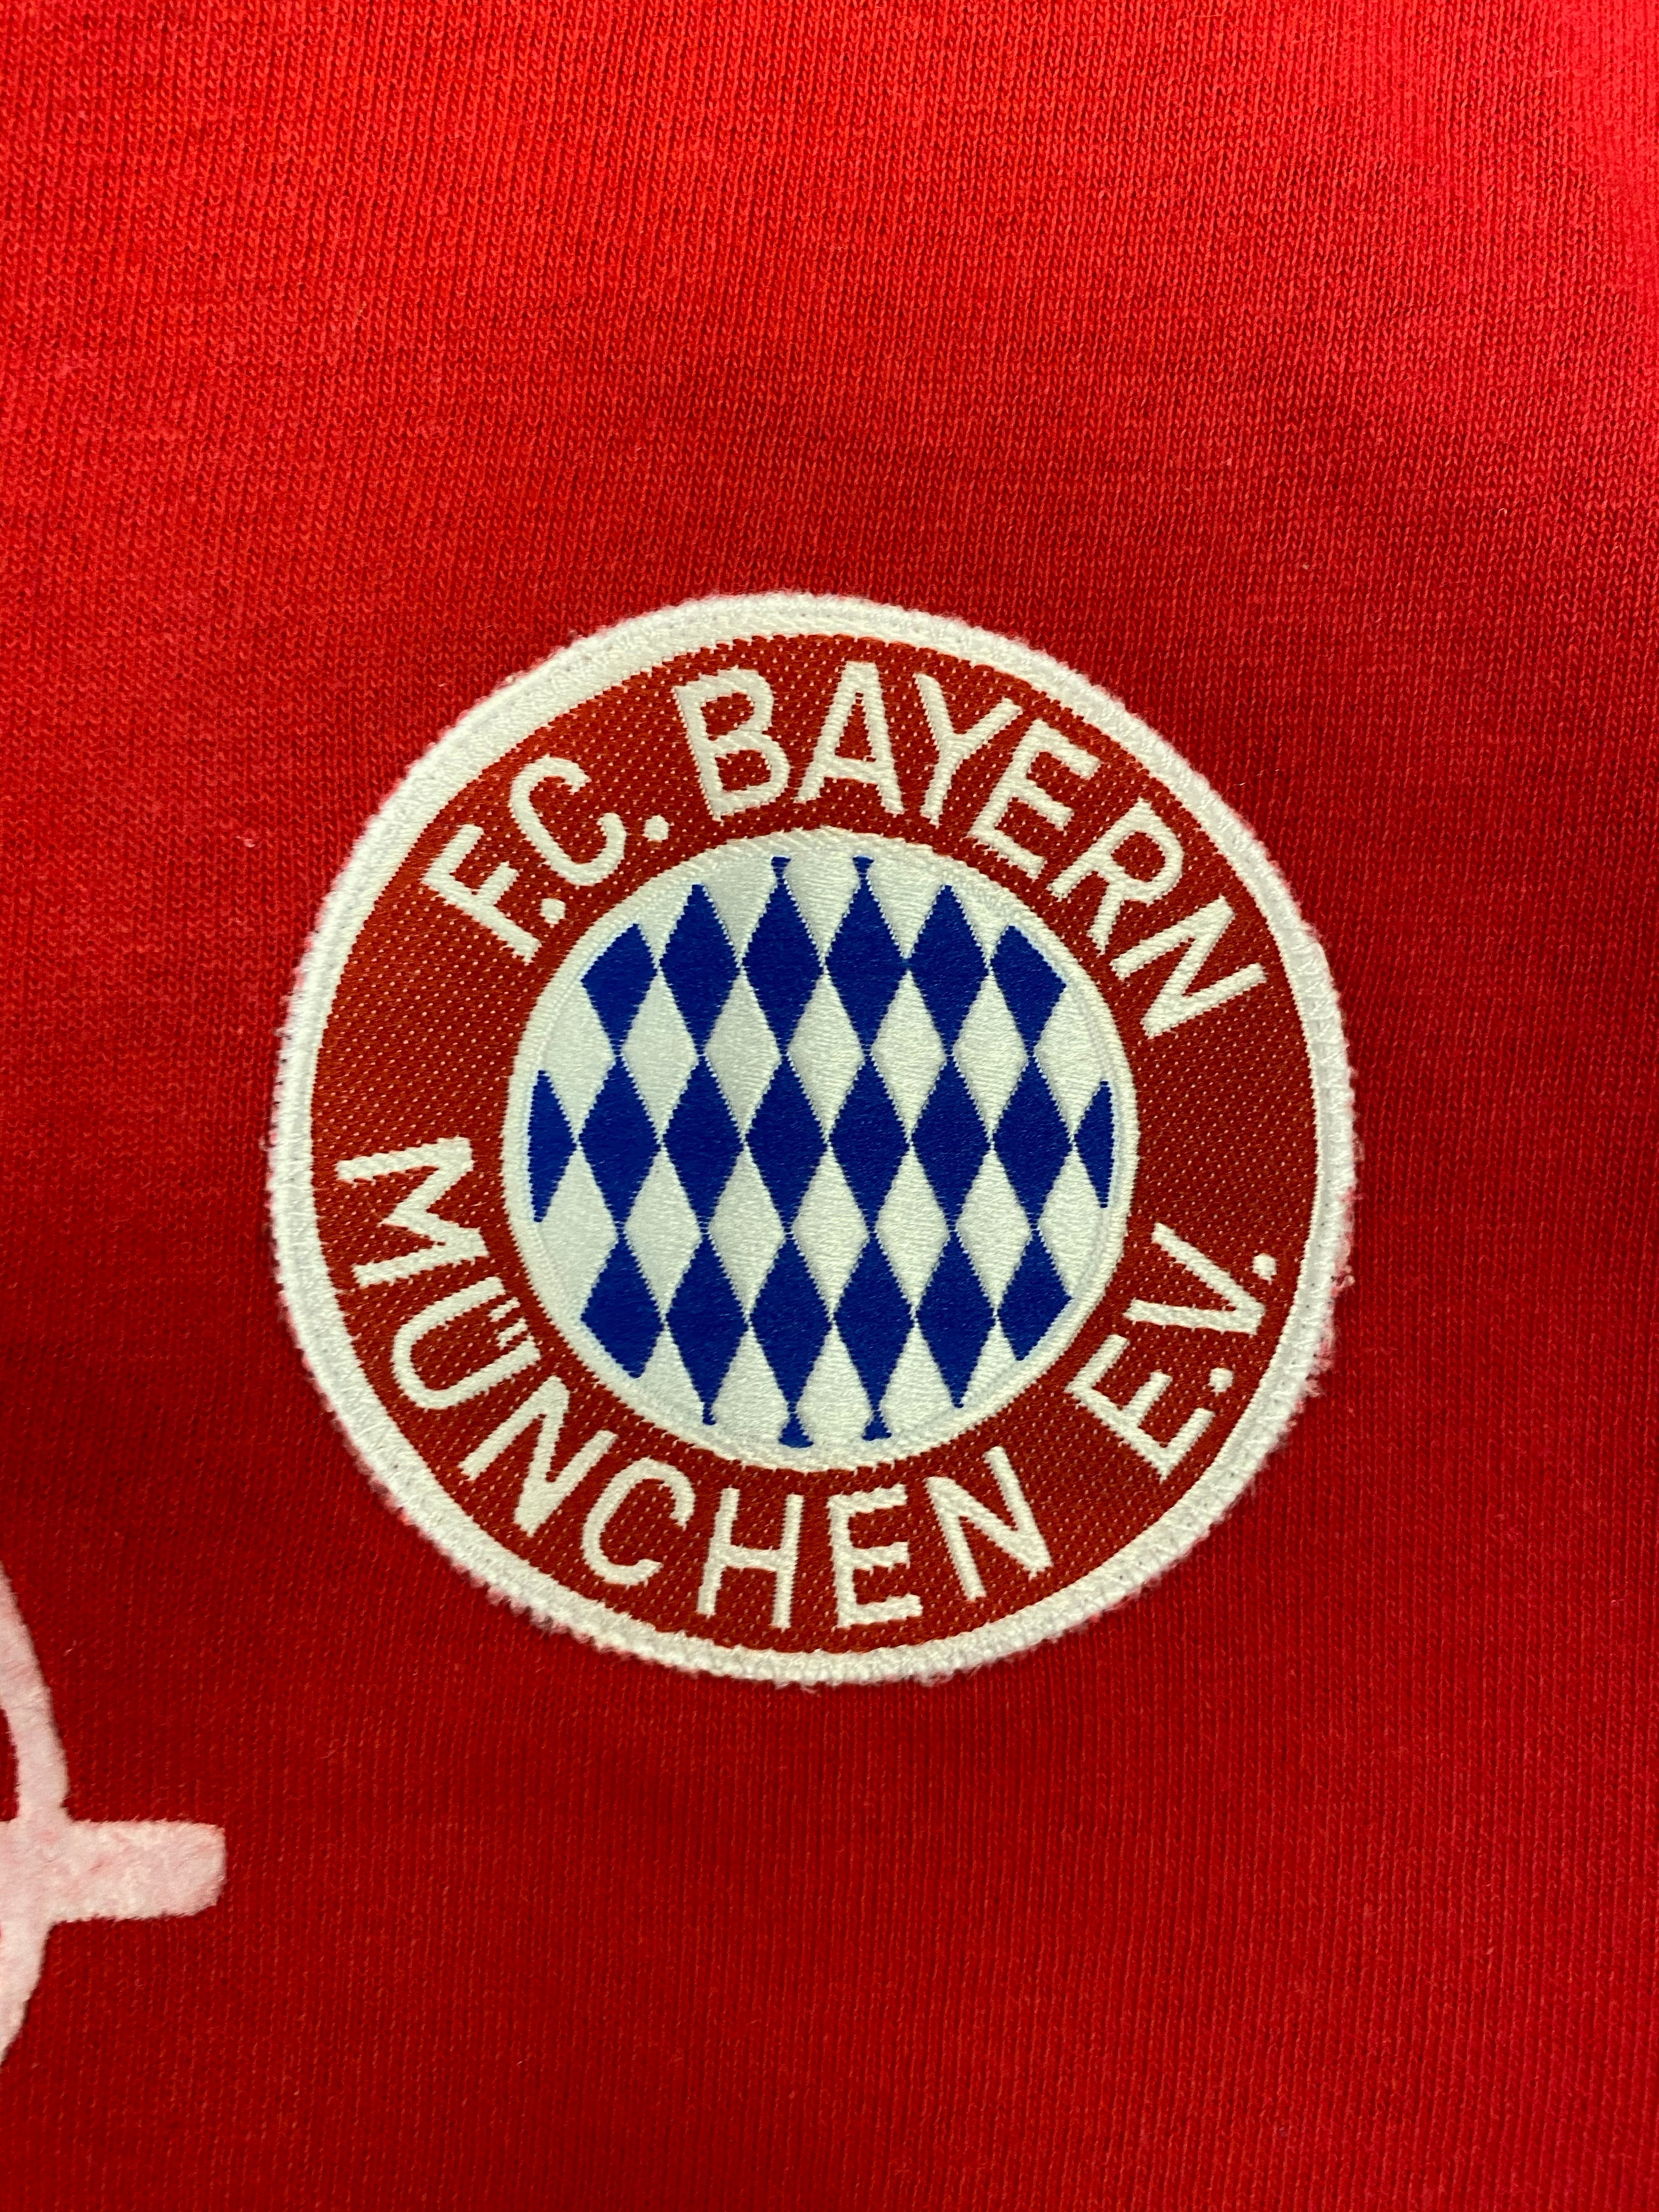 Maillot L/S domicile du Bayern Munich 1989/91 (M) 8.5/10